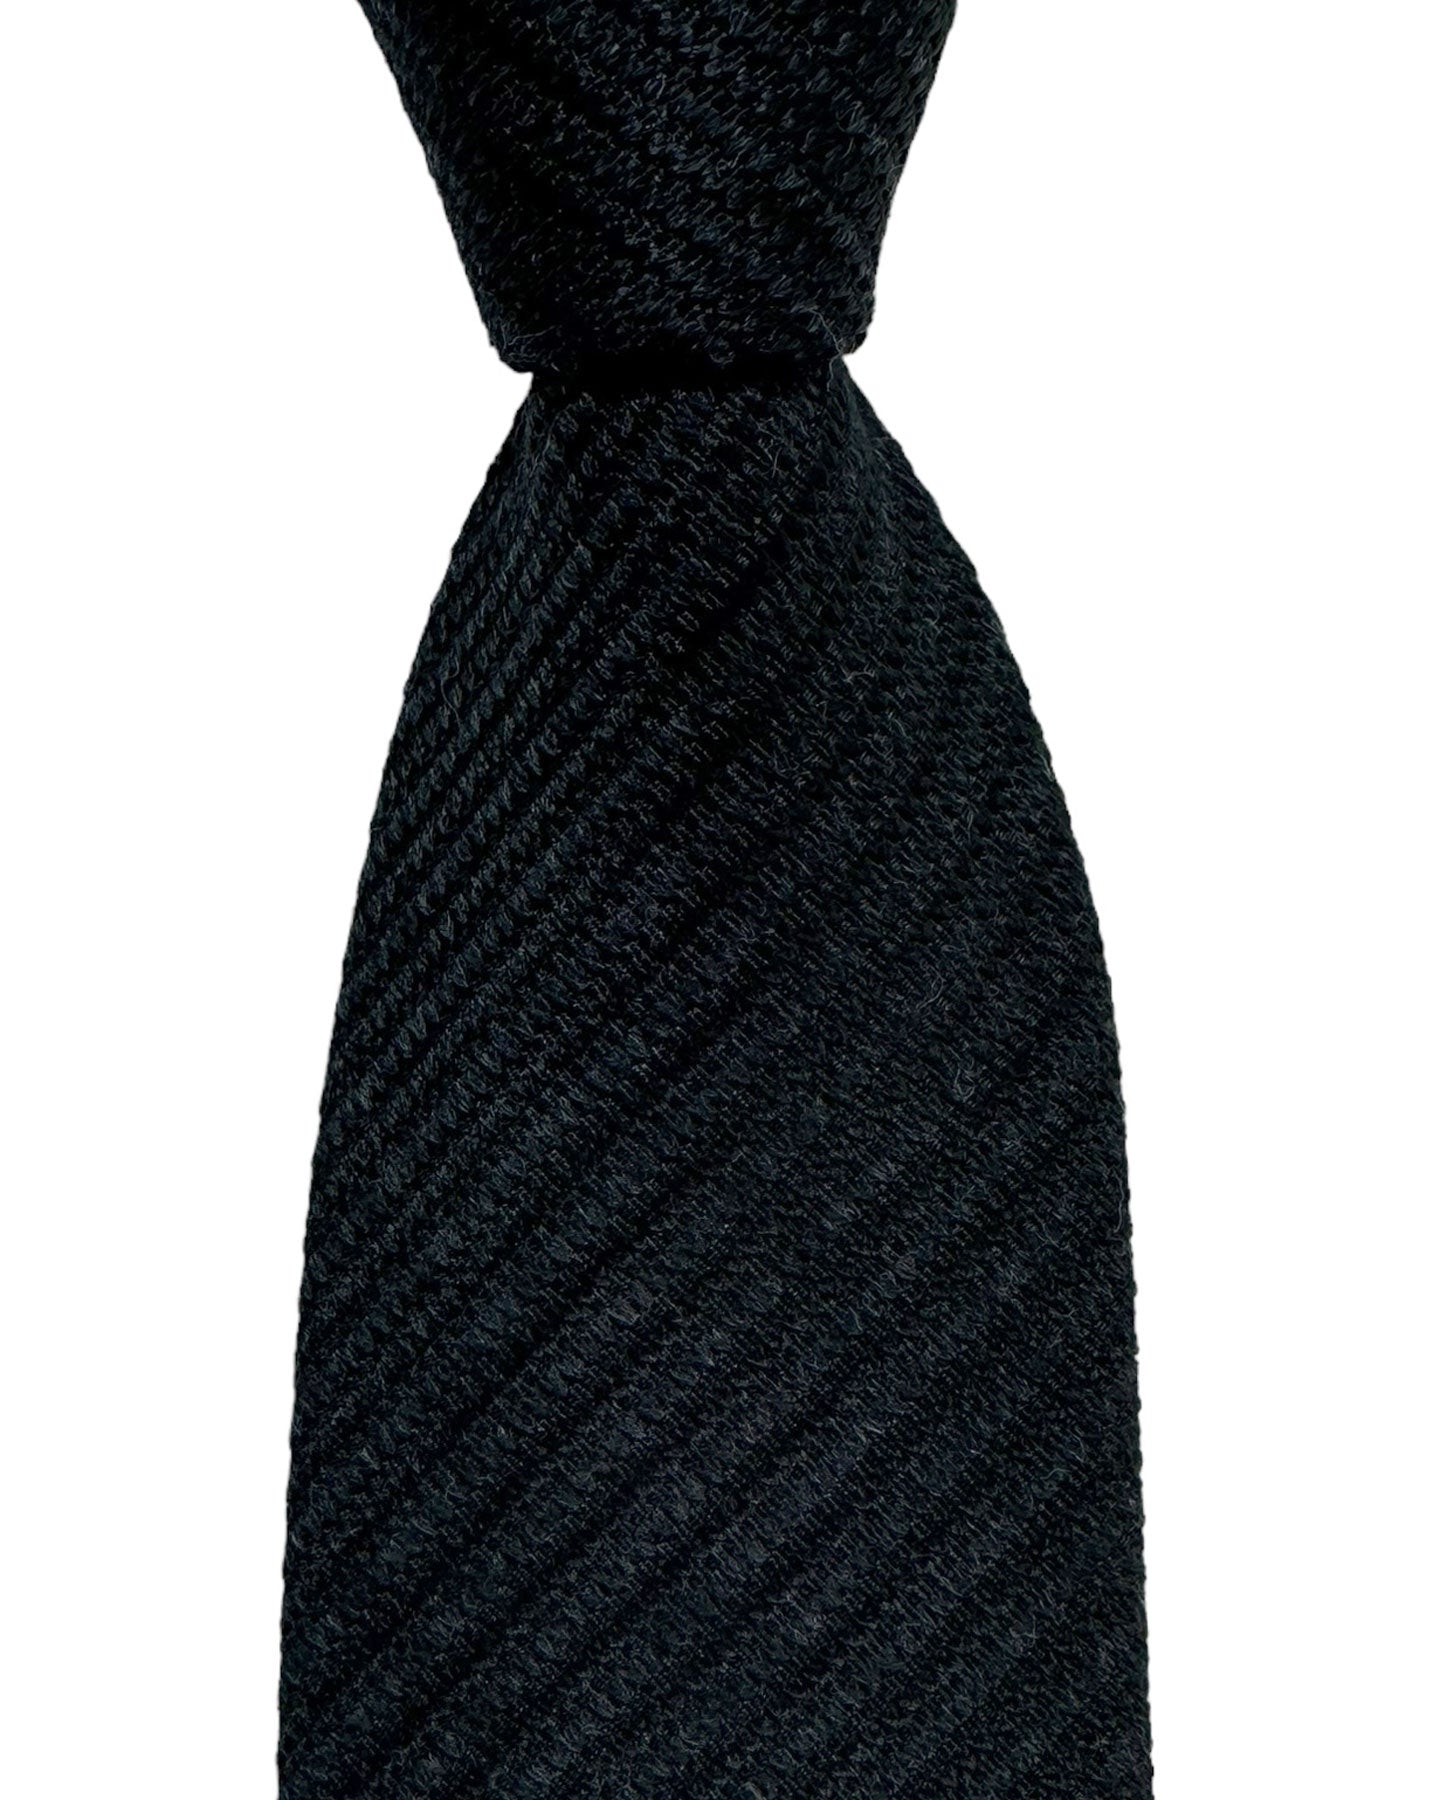 Tom Ford Silk Wool Tie Black Dark Blue Stripes